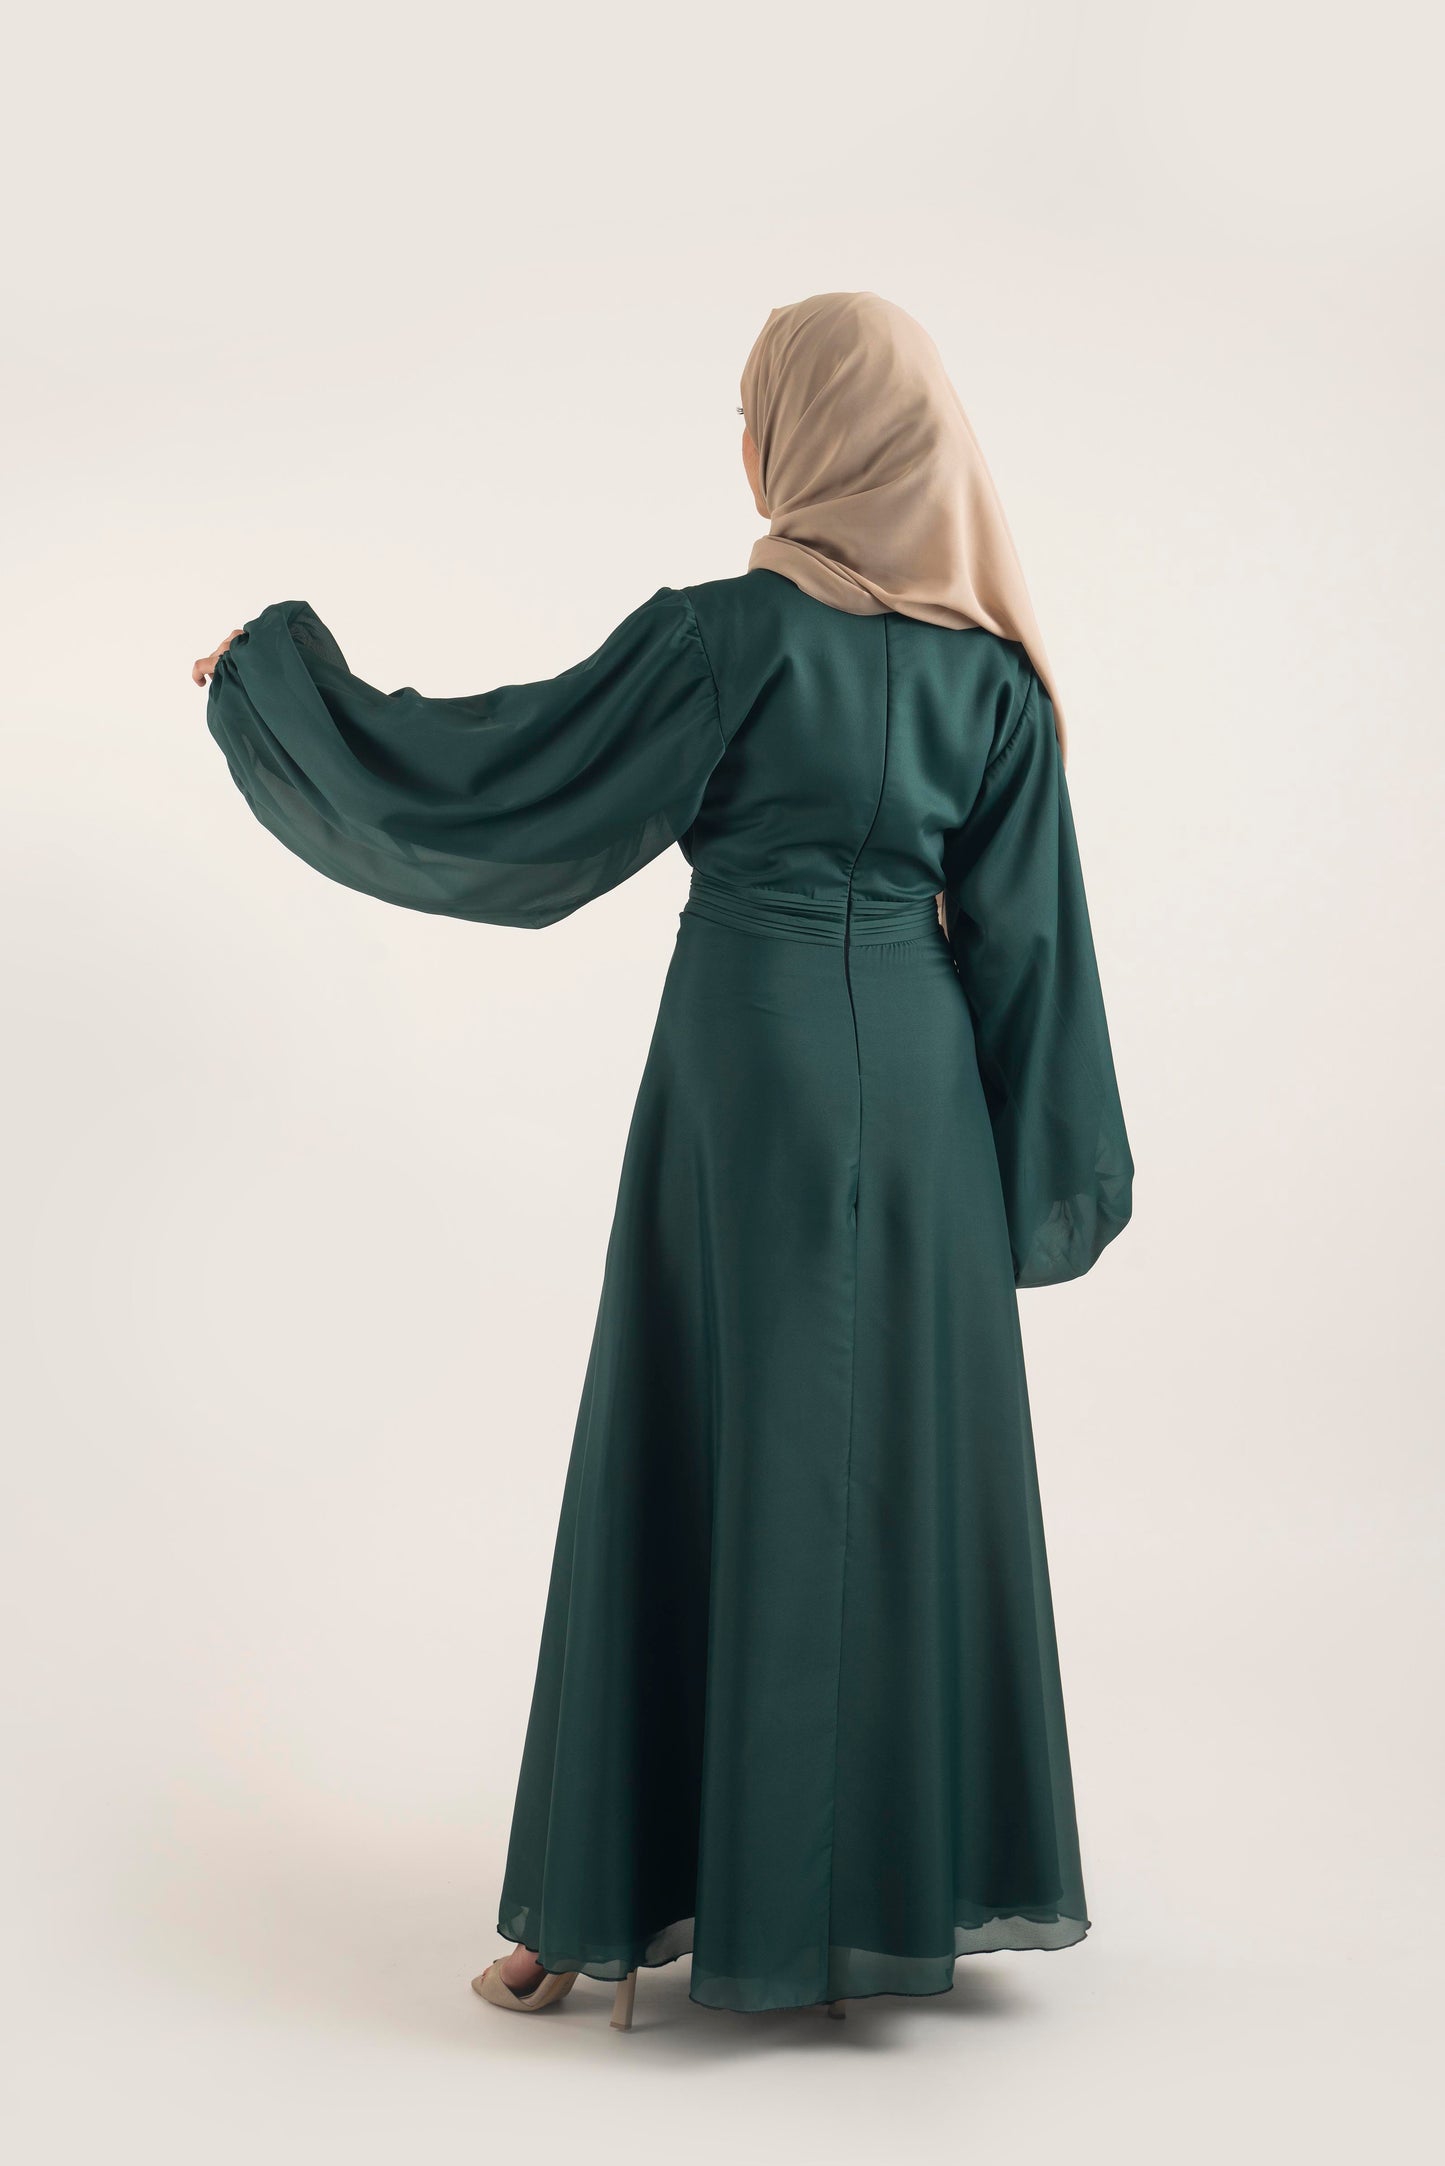 Sacramento Dress - Modest Dresses, Abaya, Long Sleeve dress!